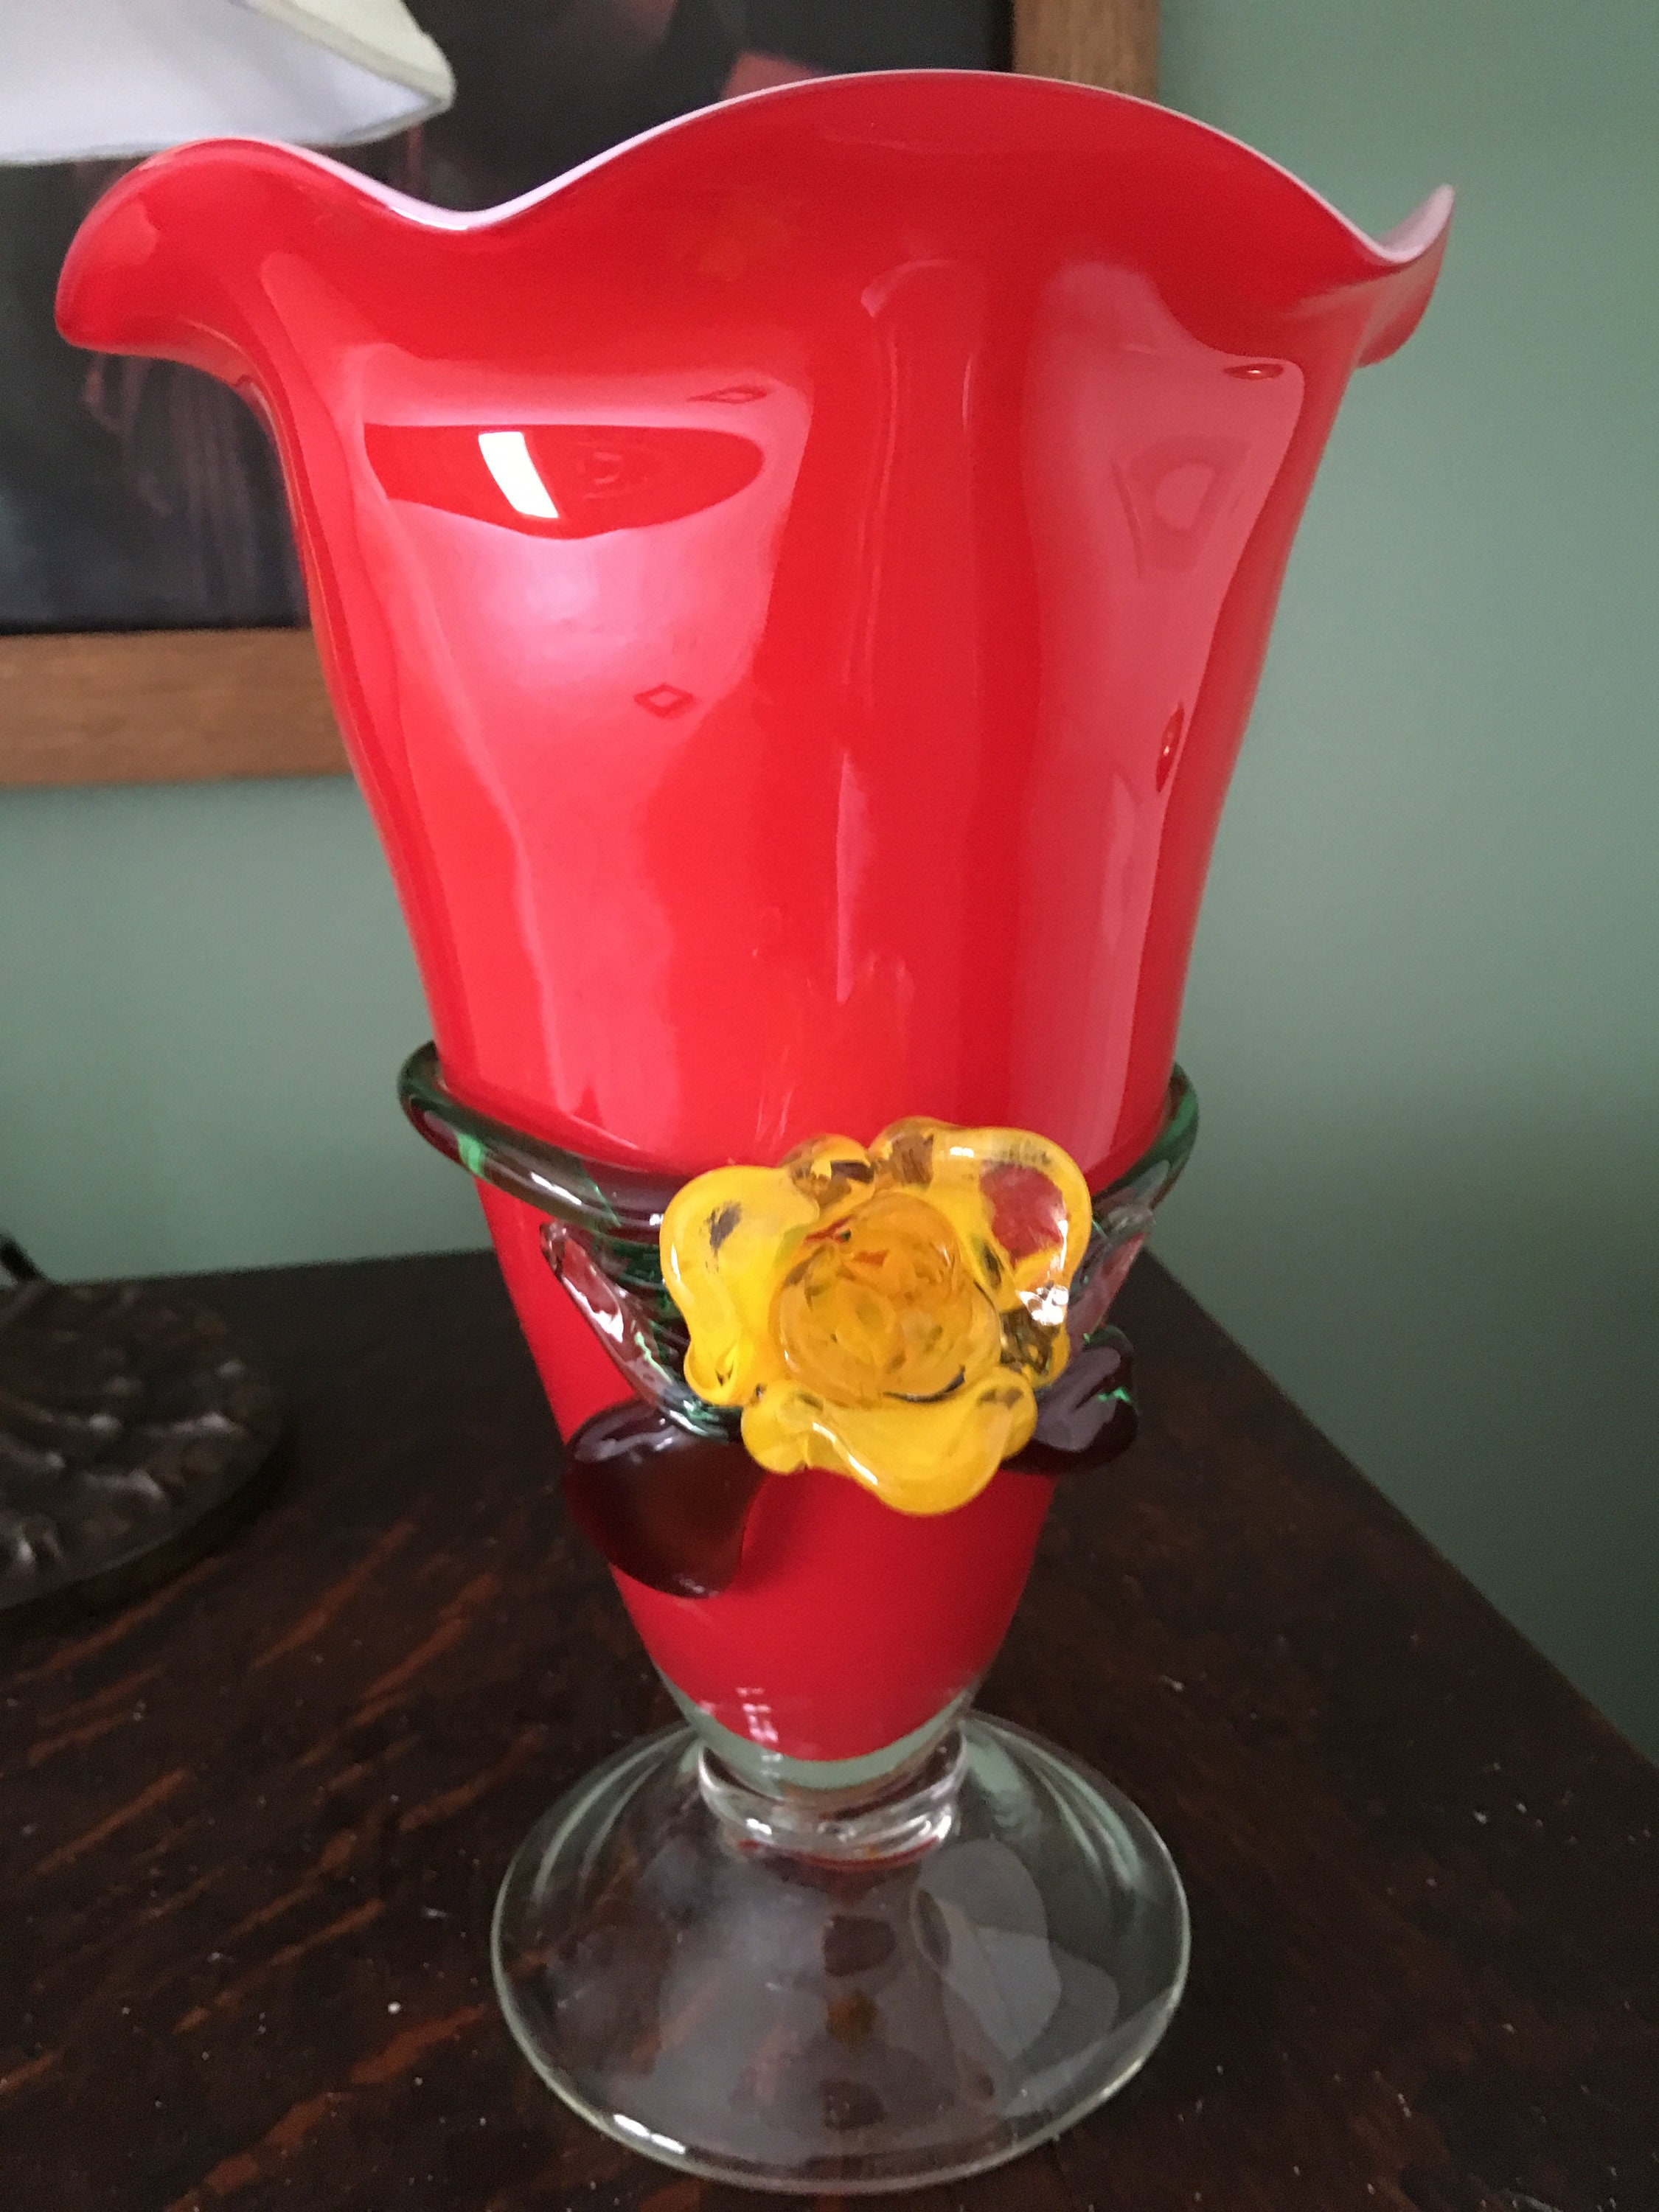 Large Artisan Hand Blown Glass Irregular Shape Vase – RusticReach